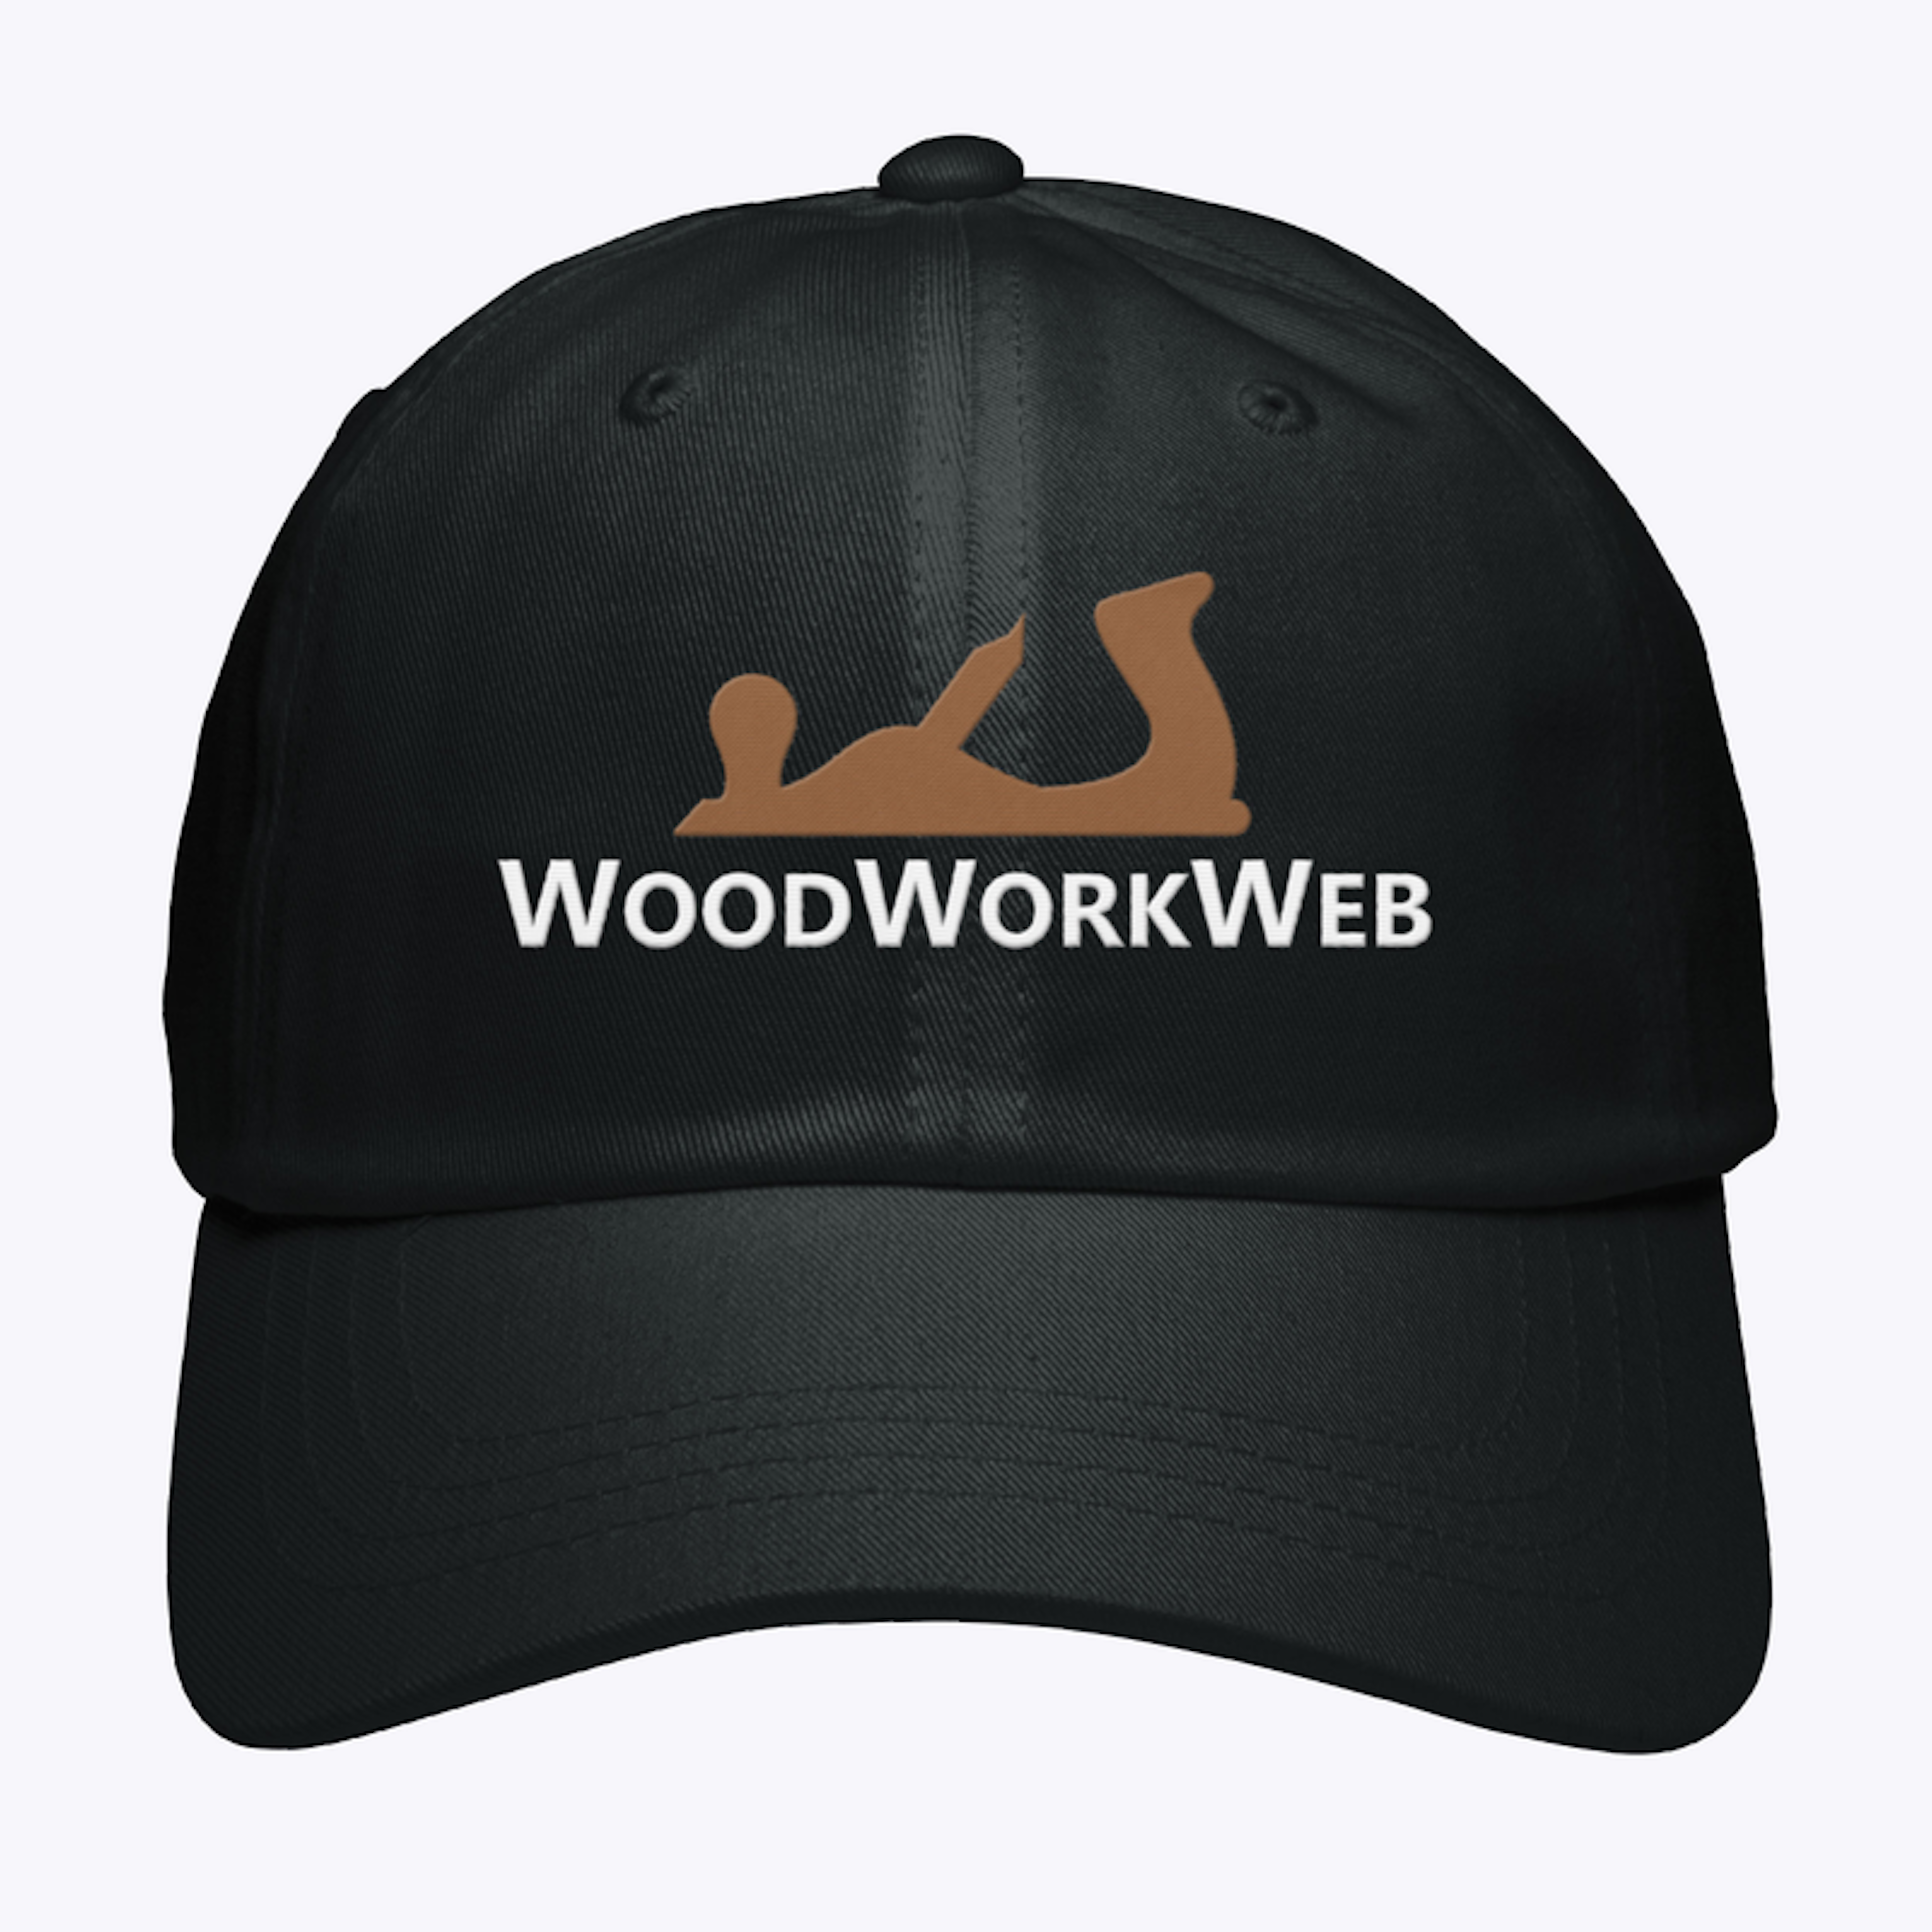 Woodworkweb Plane Hat